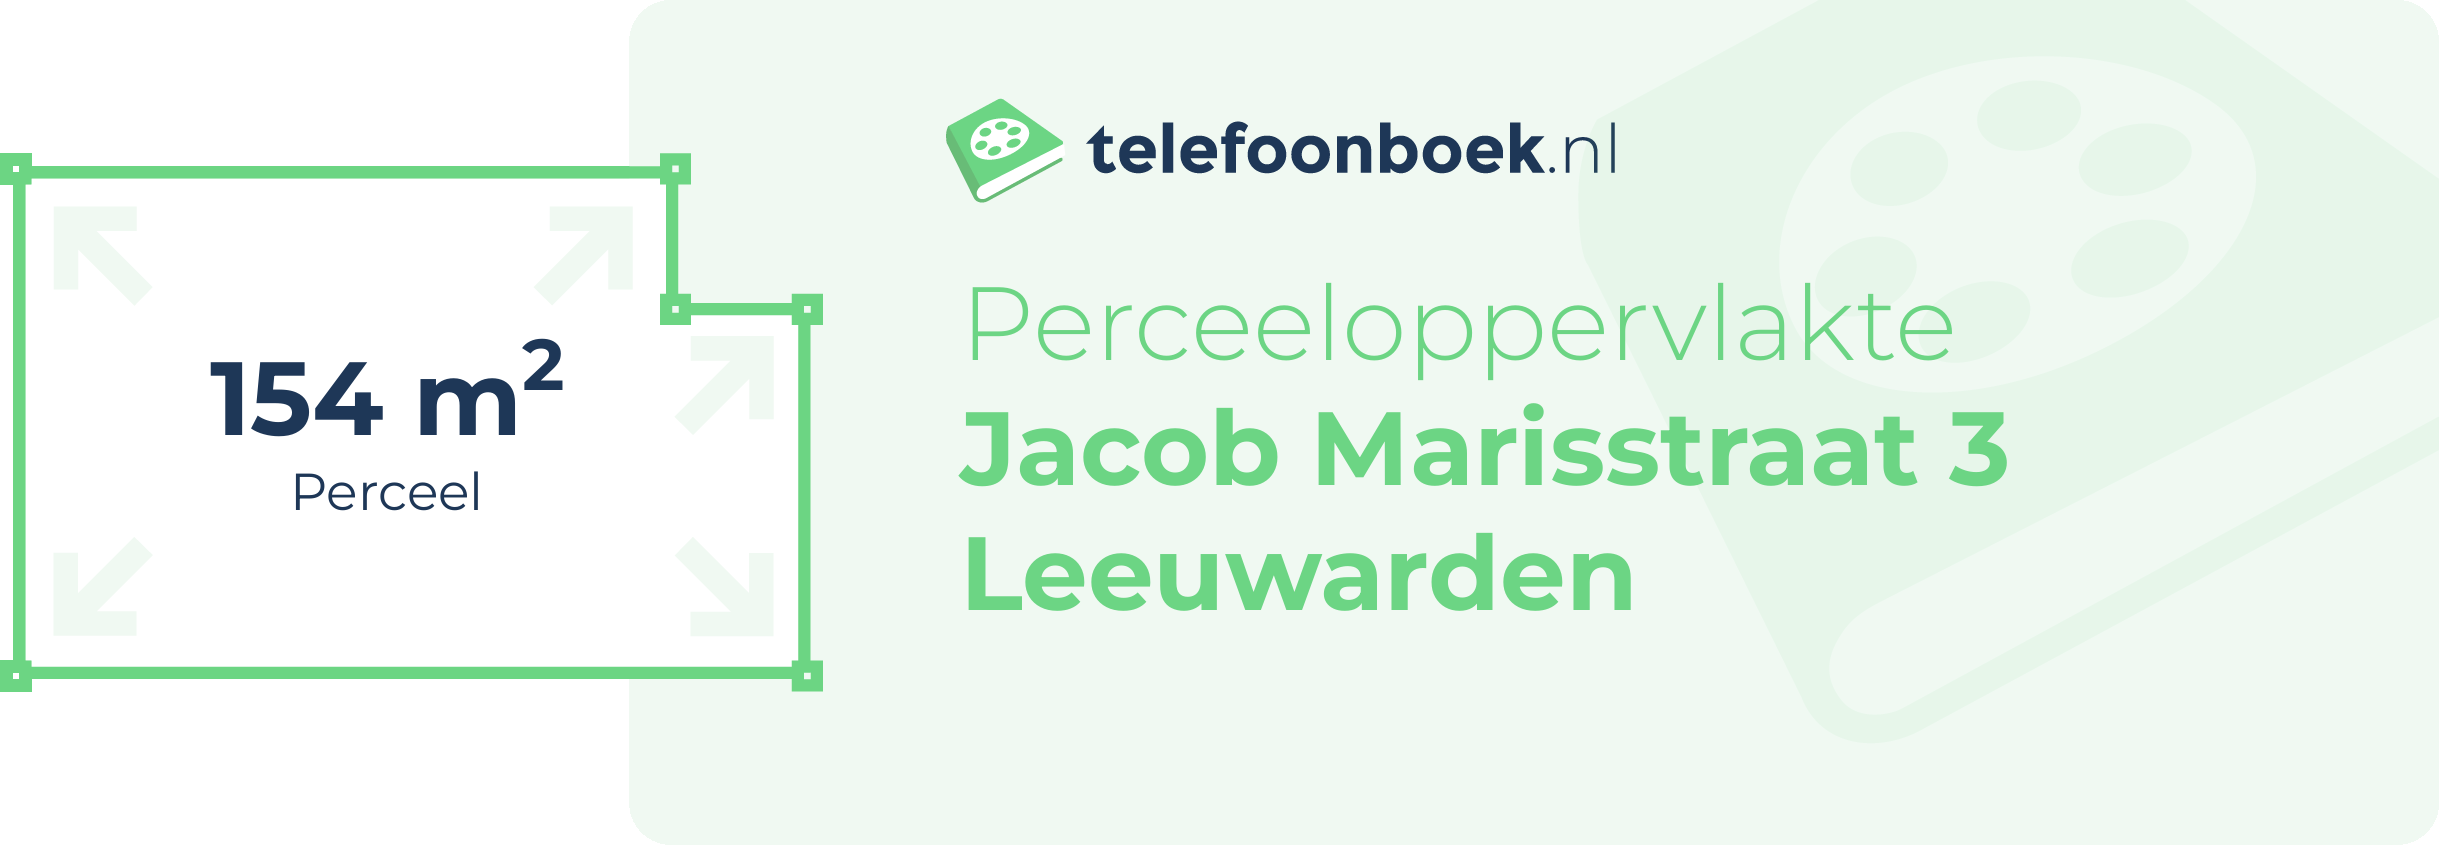 Perceeloppervlakte Jacob Marisstraat 3 Leeuwarden